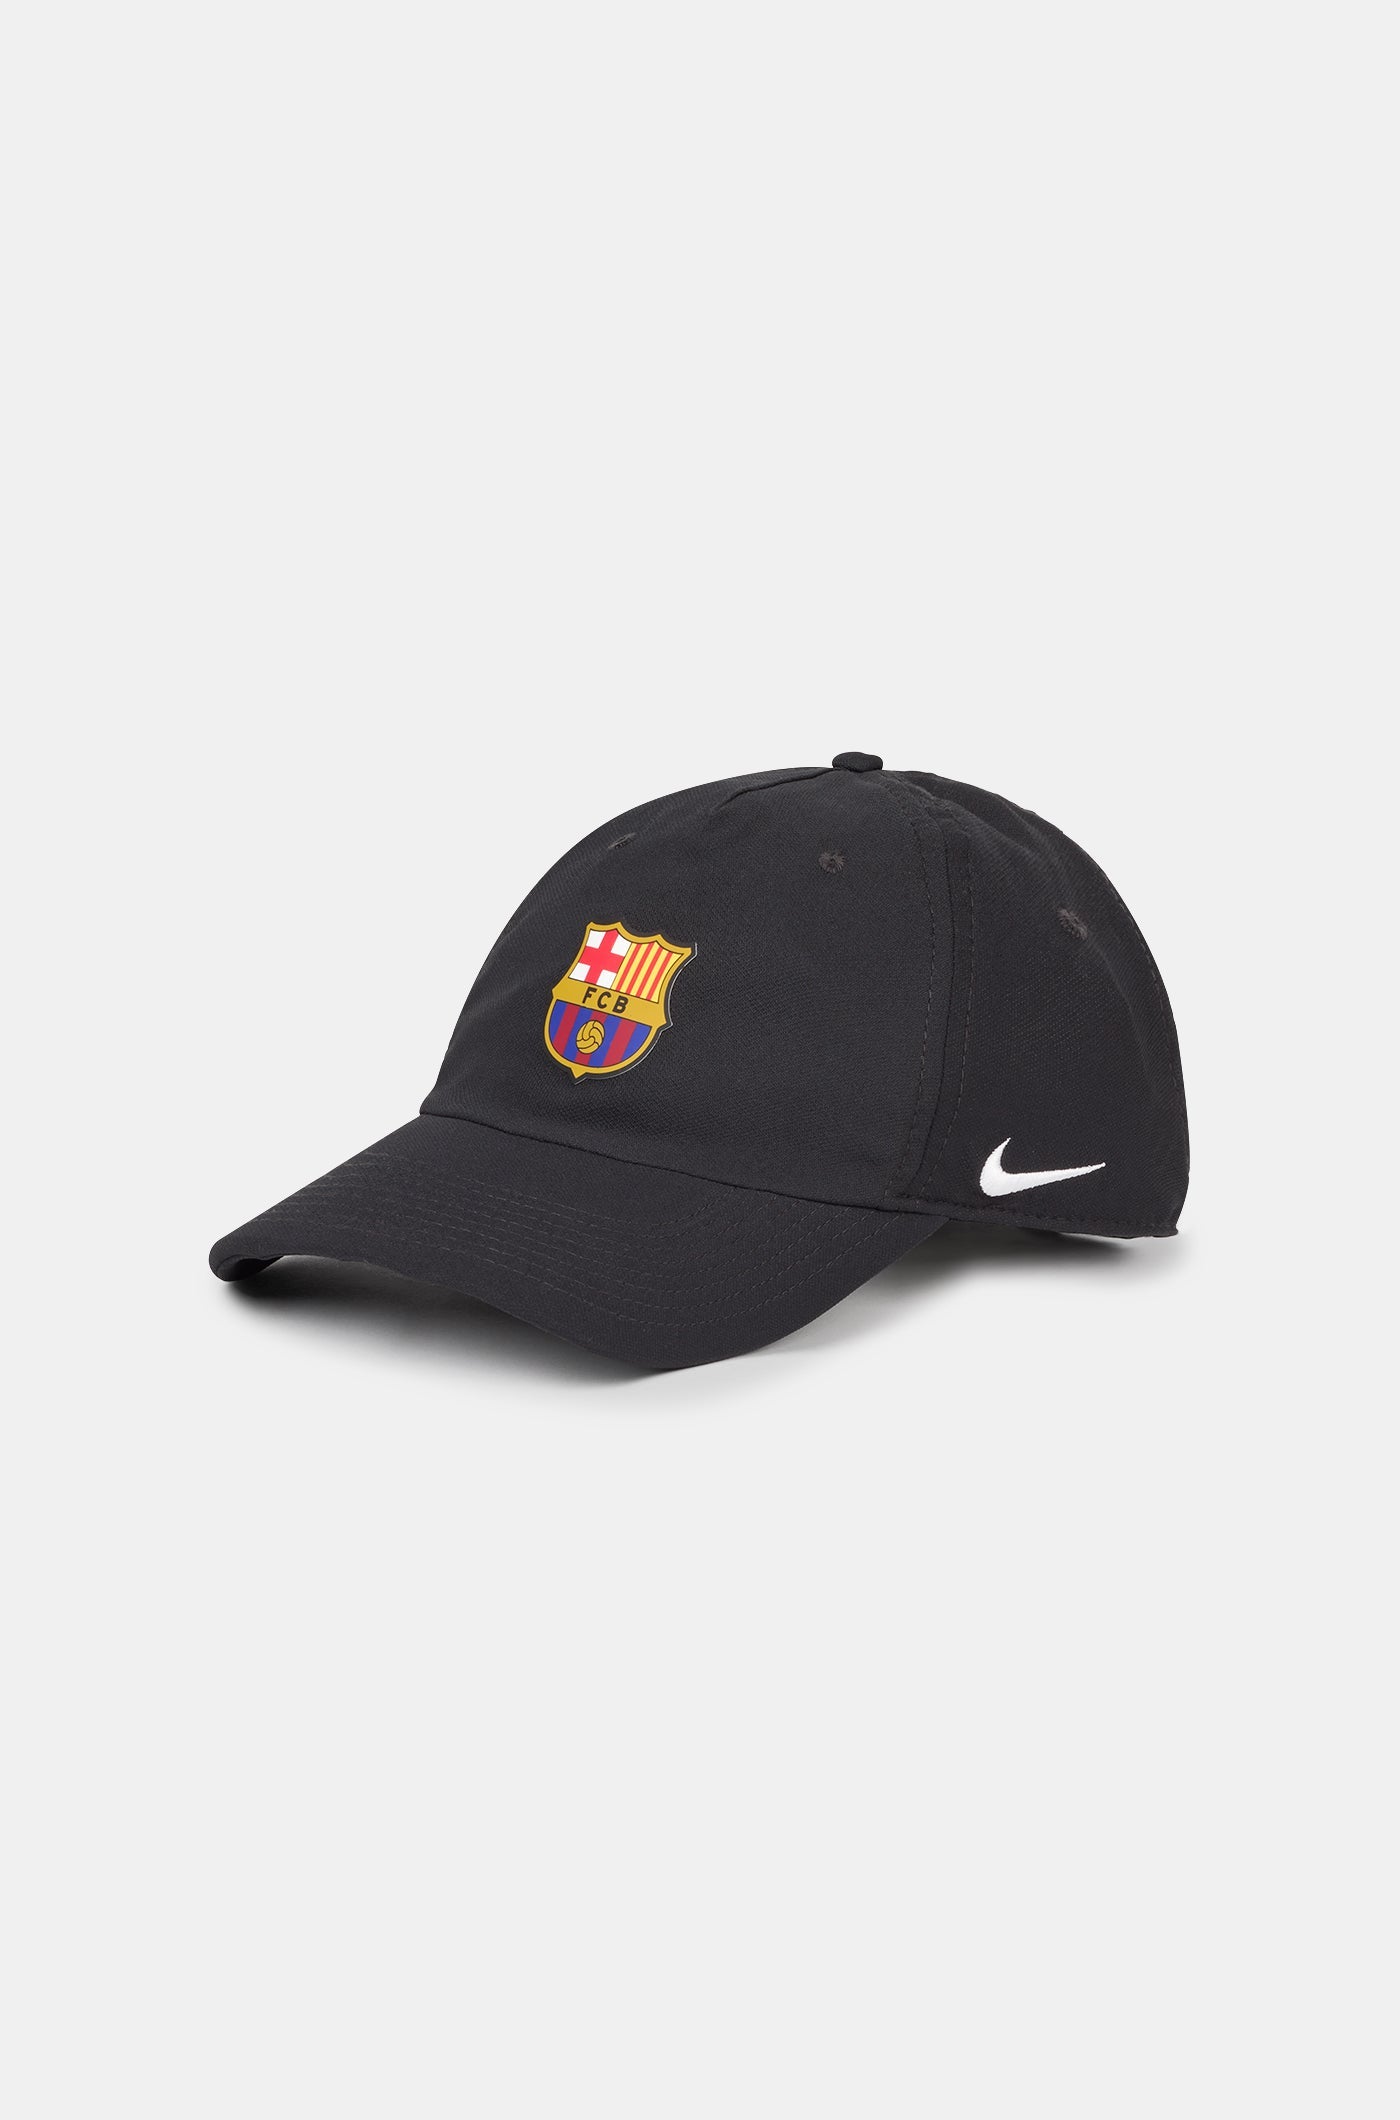 Cap crest black Barça Nike - size L/XL